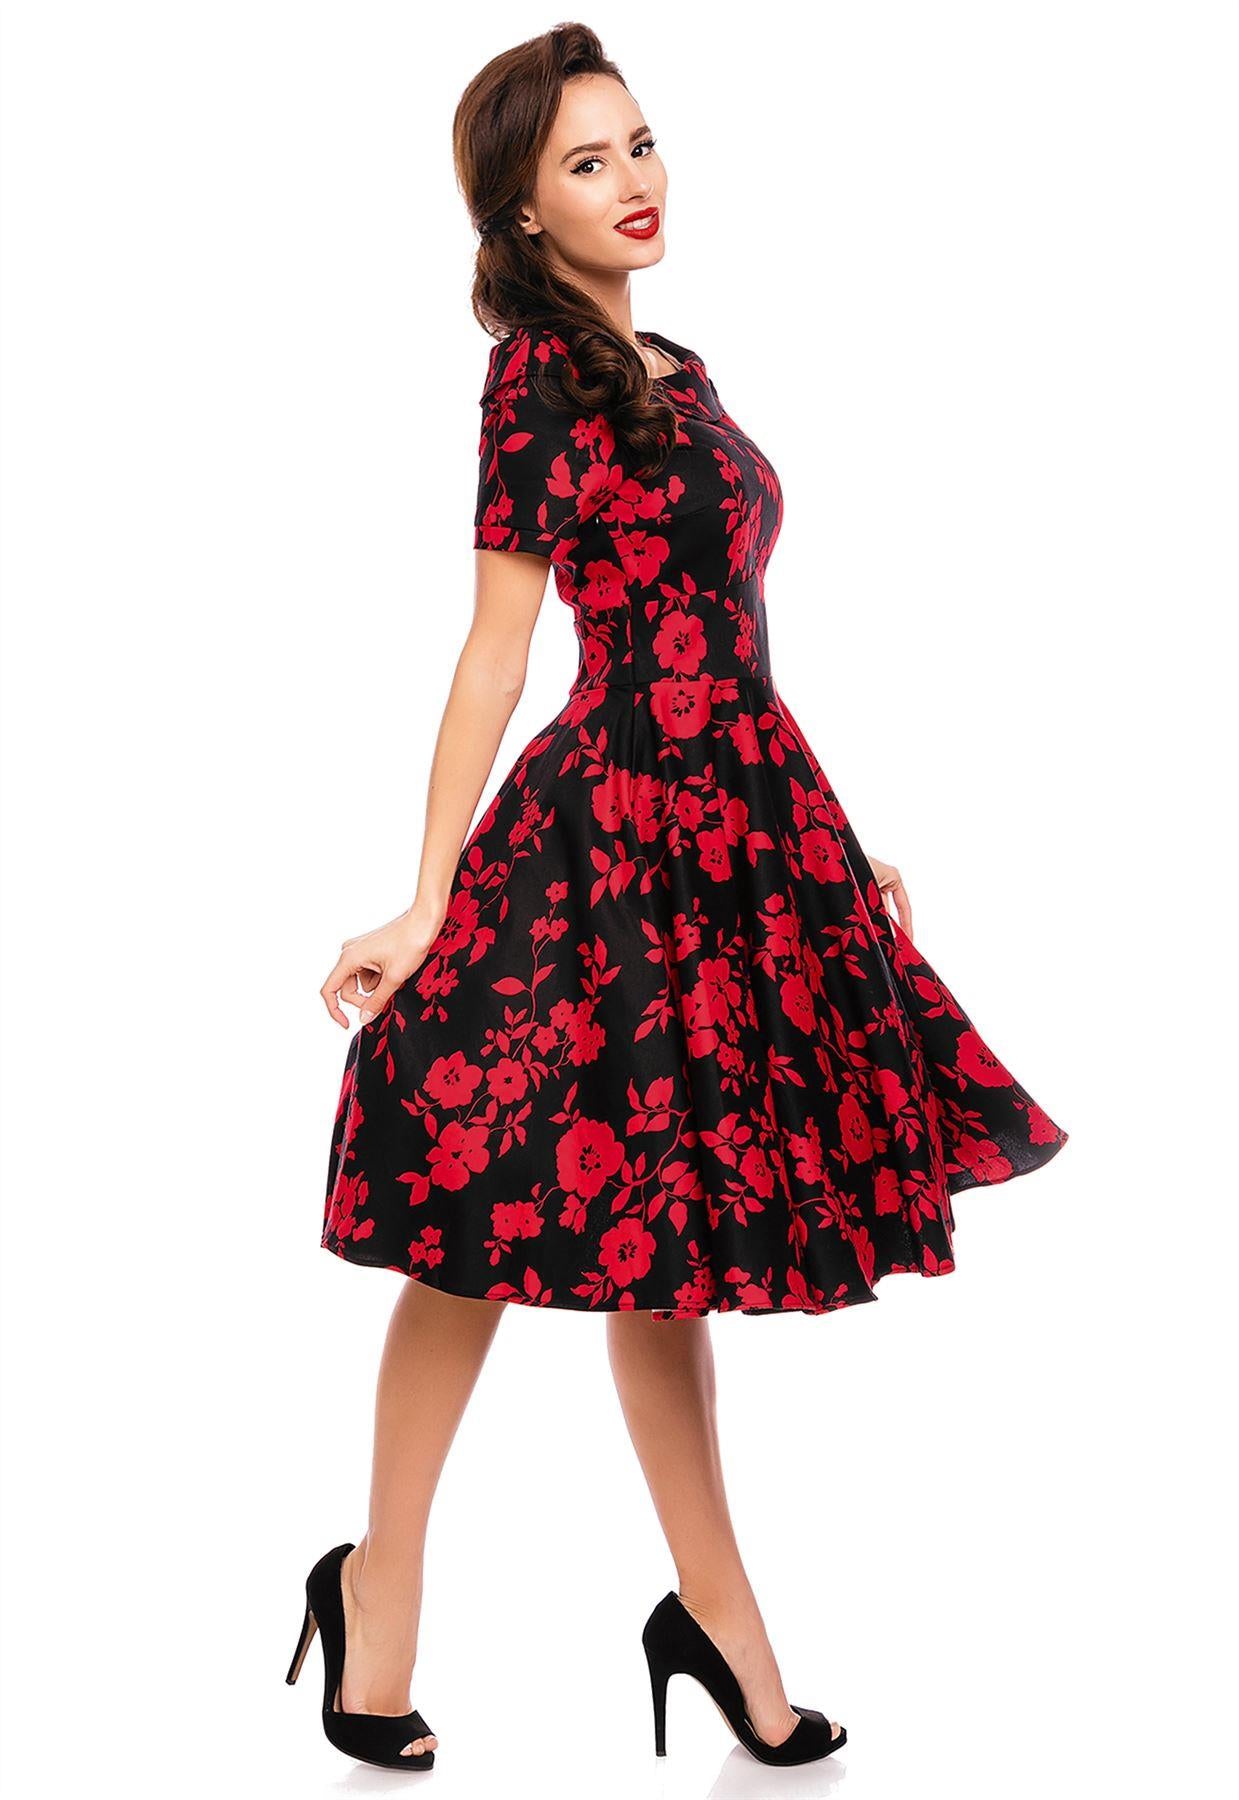 Model wearing our bateau neckline Darlene dress, in black/red floral print, side view